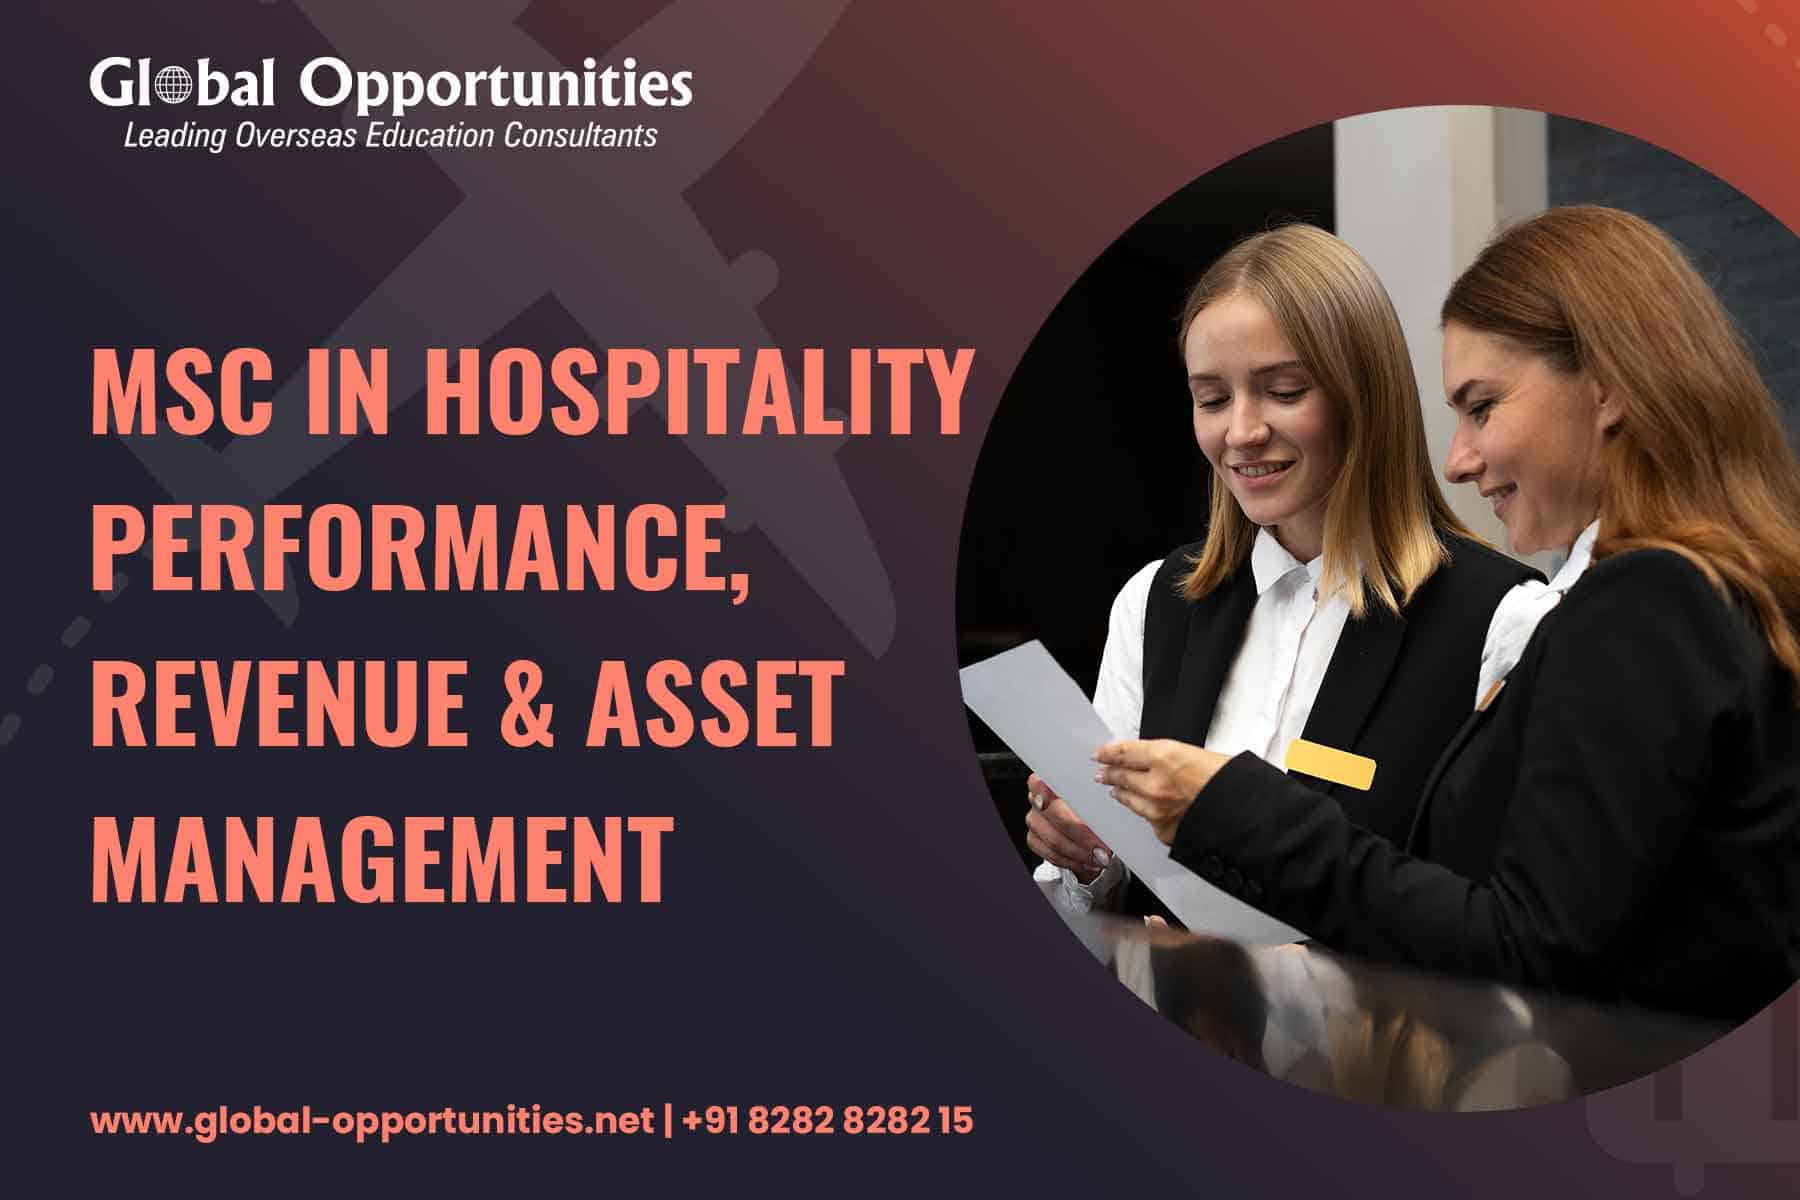 MSc in Hospitality Performance, Revenue & Asset Management